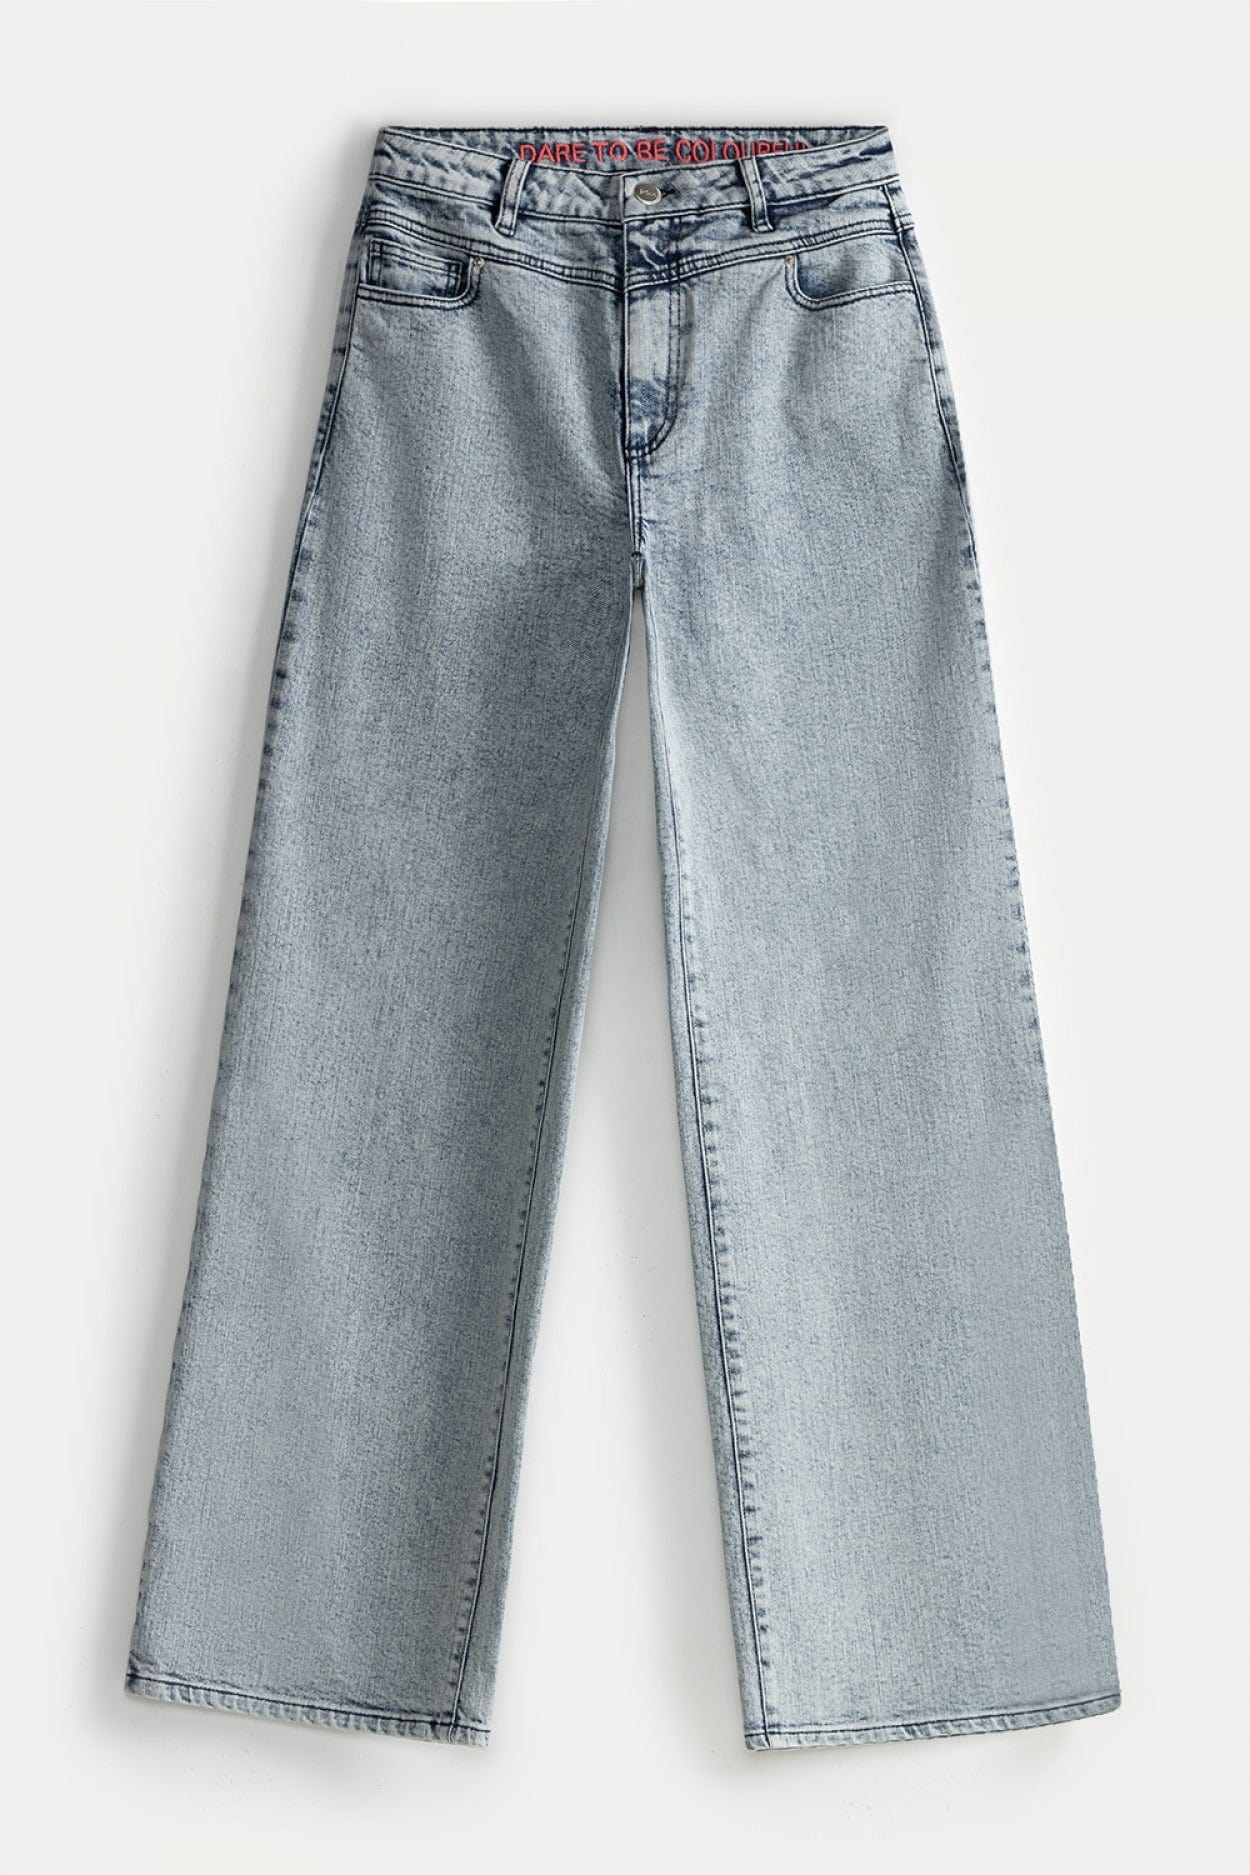 POM Amsterdam Jeans JEANS - Wide Leg Light Blue